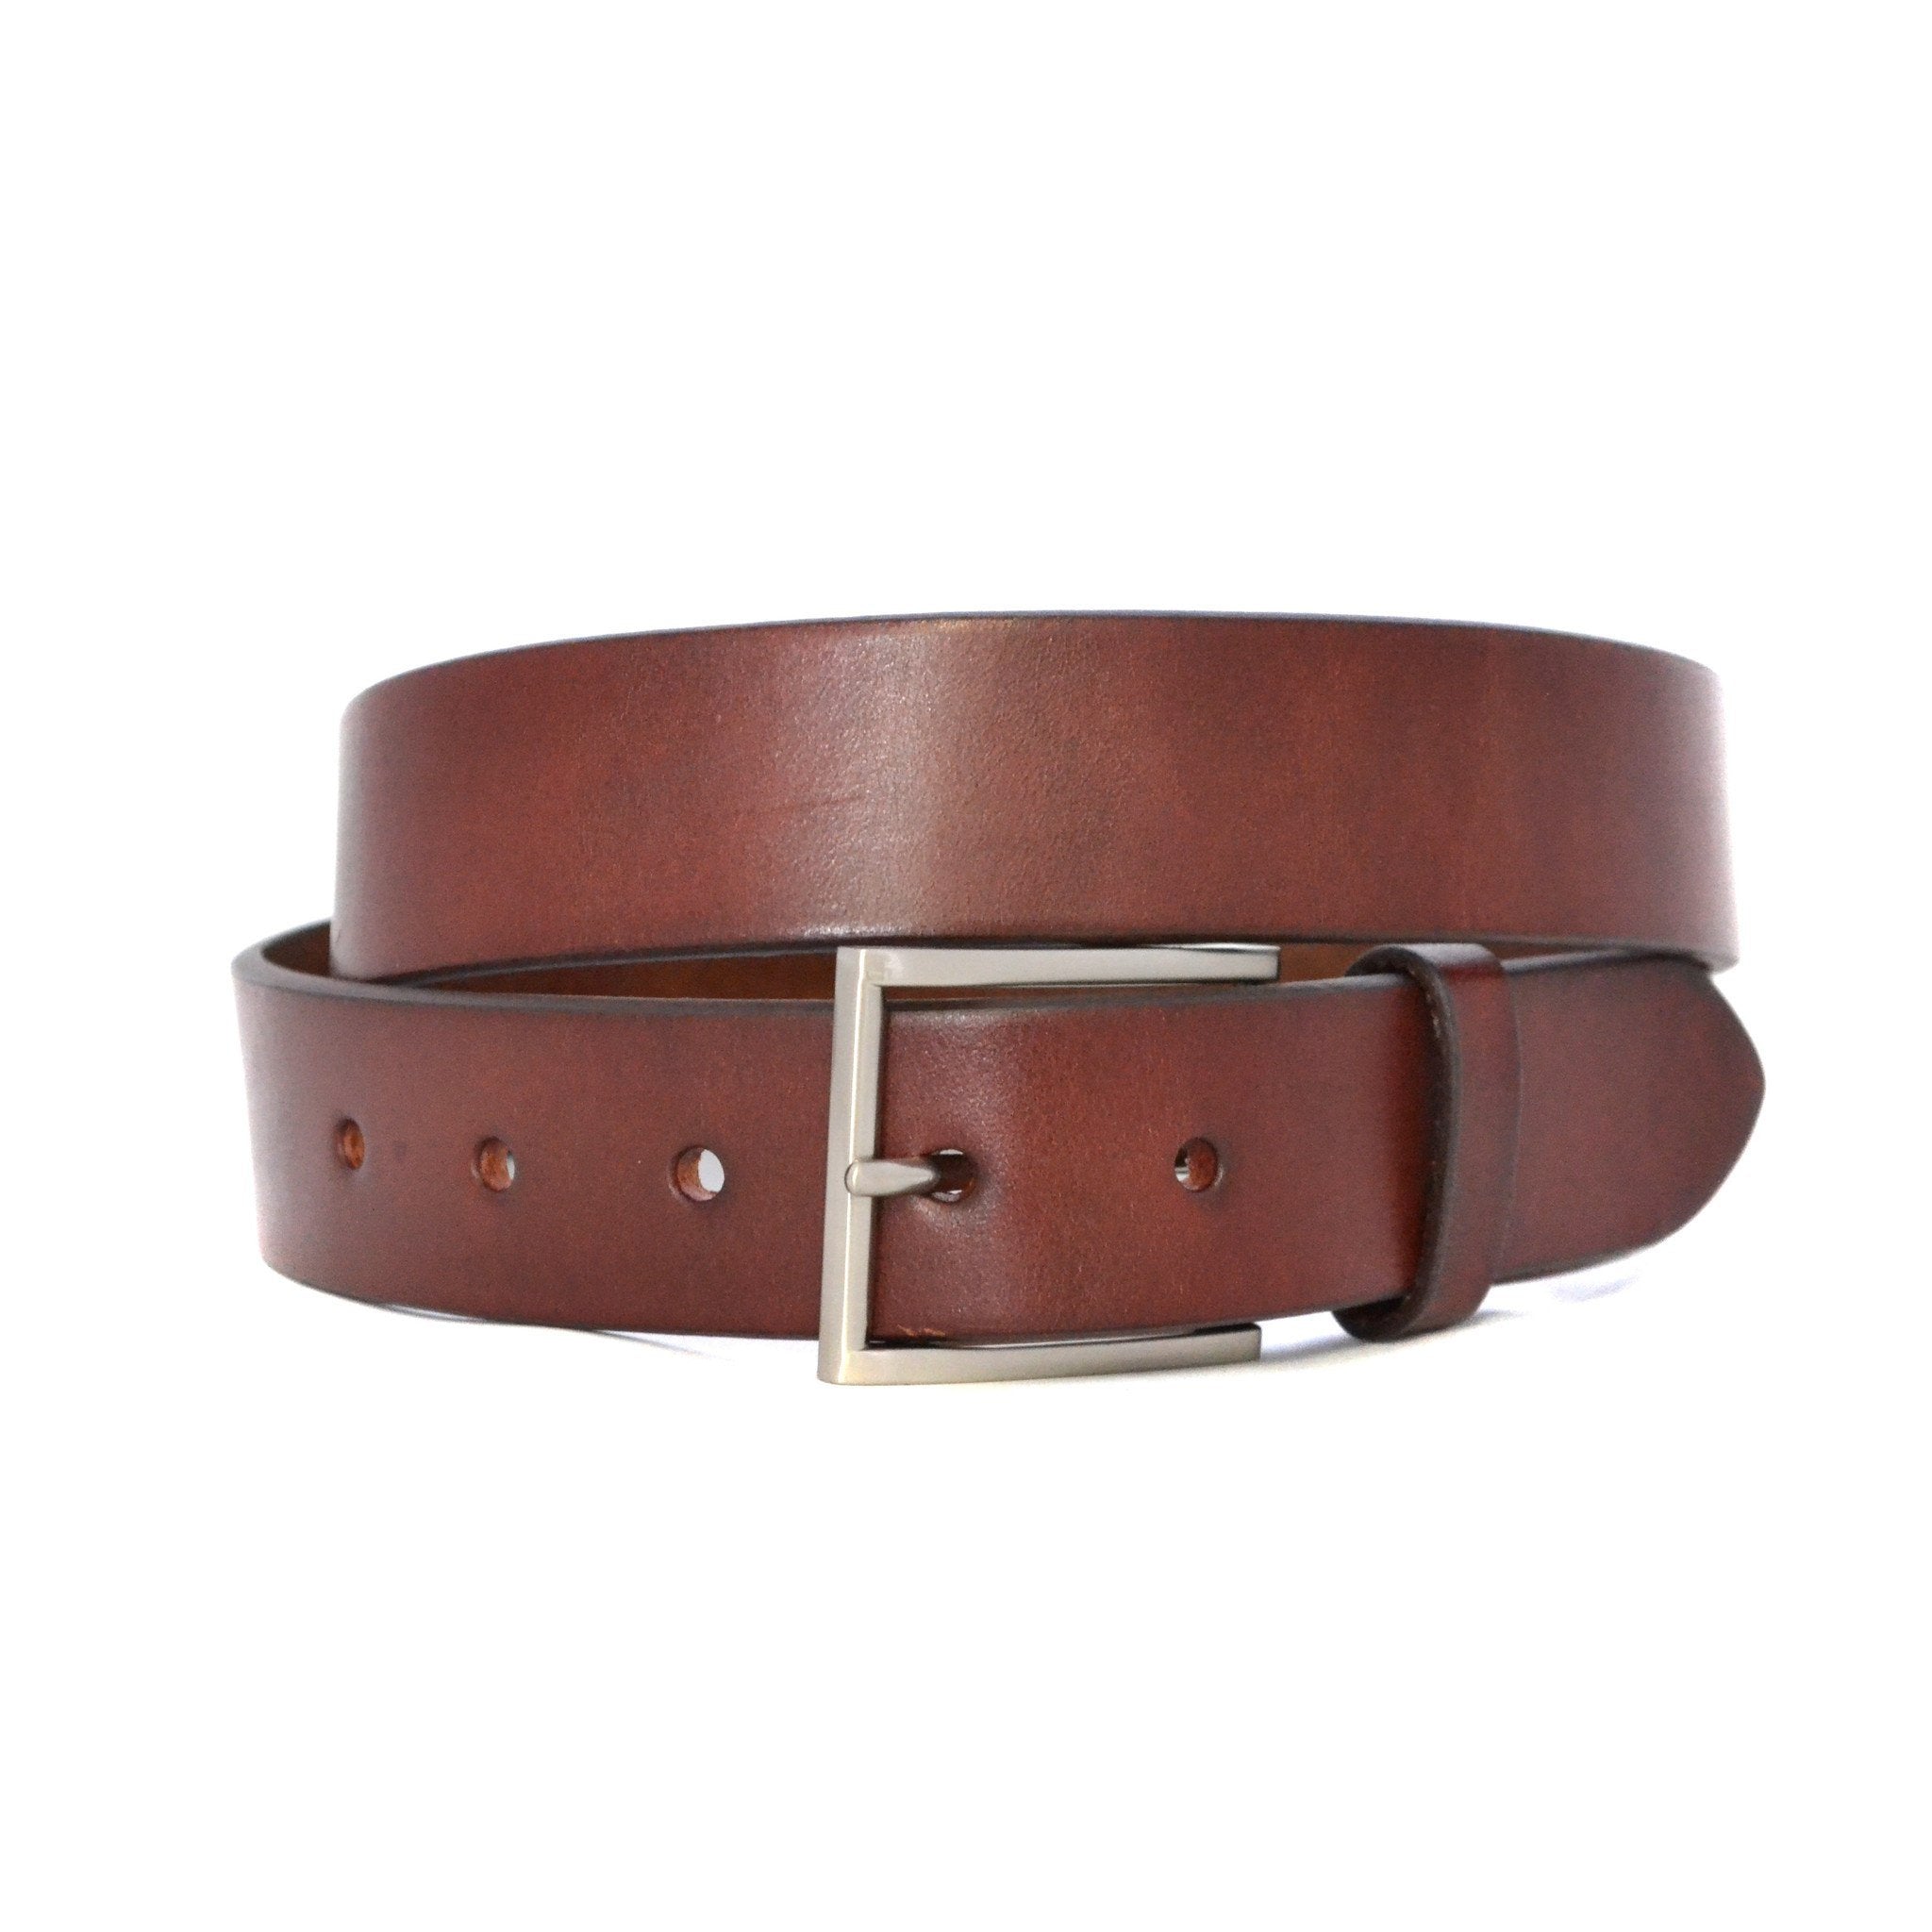 Men's Belts – The Fitting Belt Company